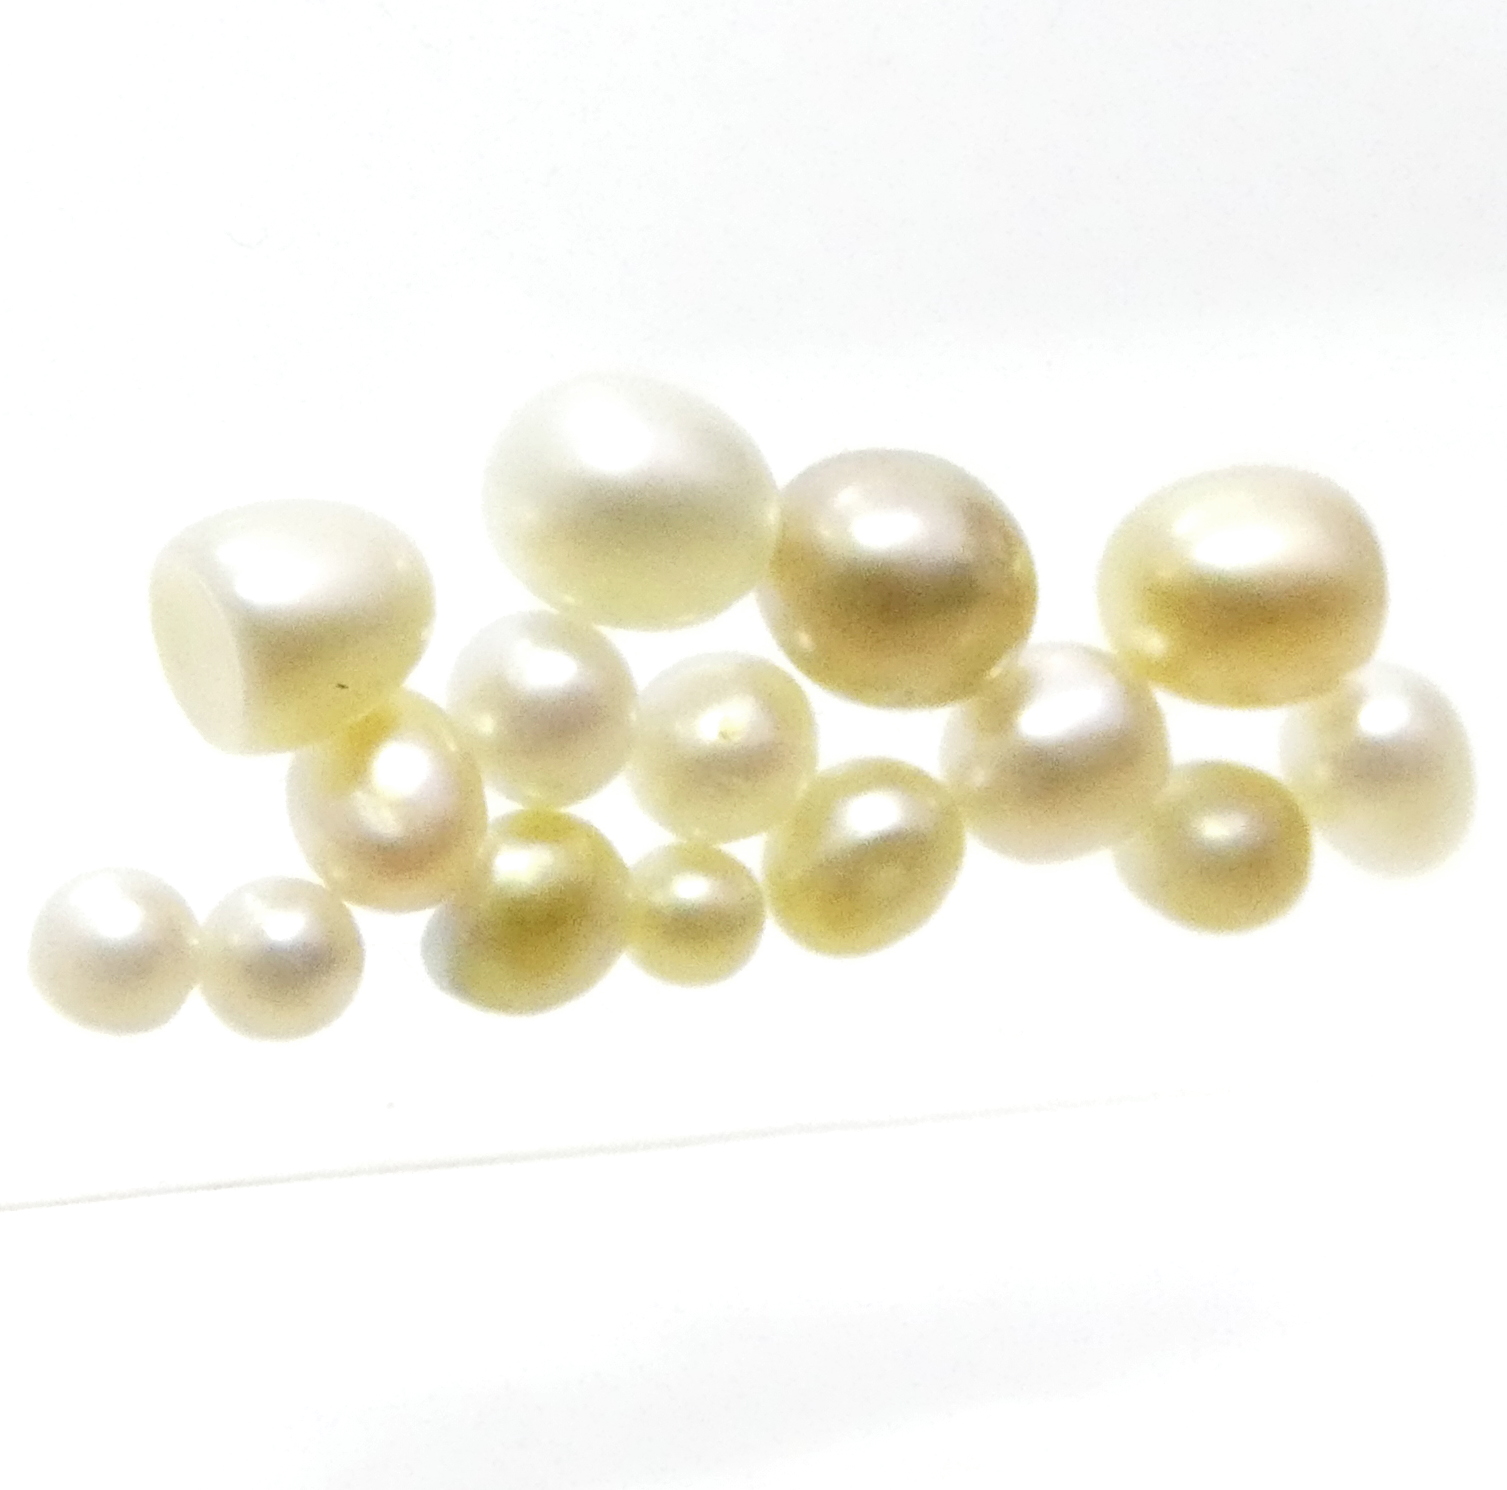 Teeny Tiny White/Champagne South Sea Keishi Pearls